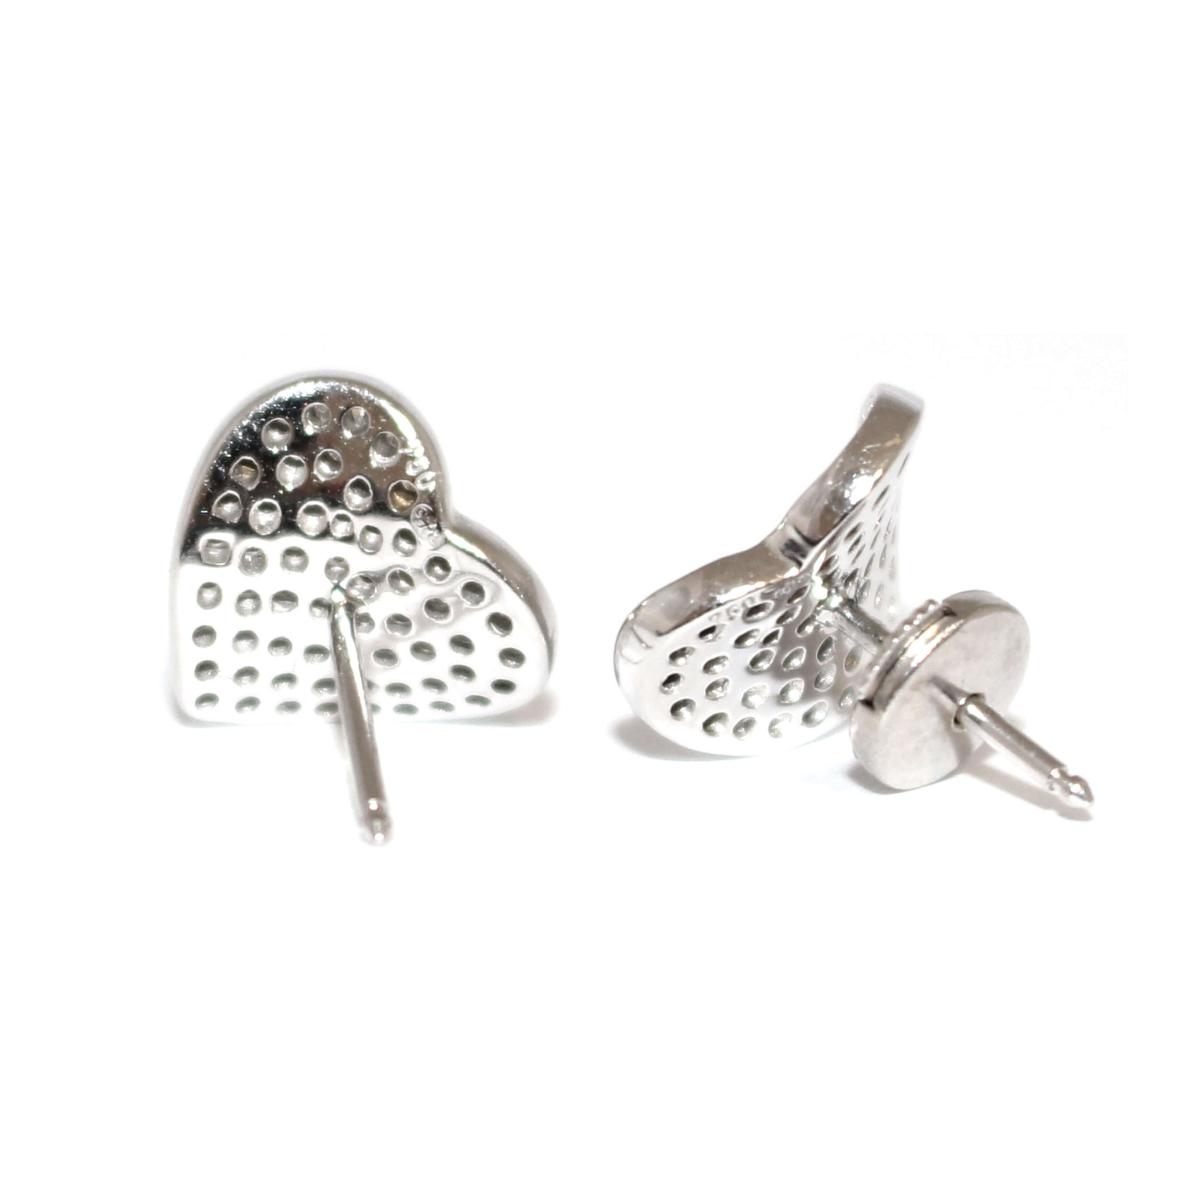 Pave Set Diamond Heart Earrings (French)